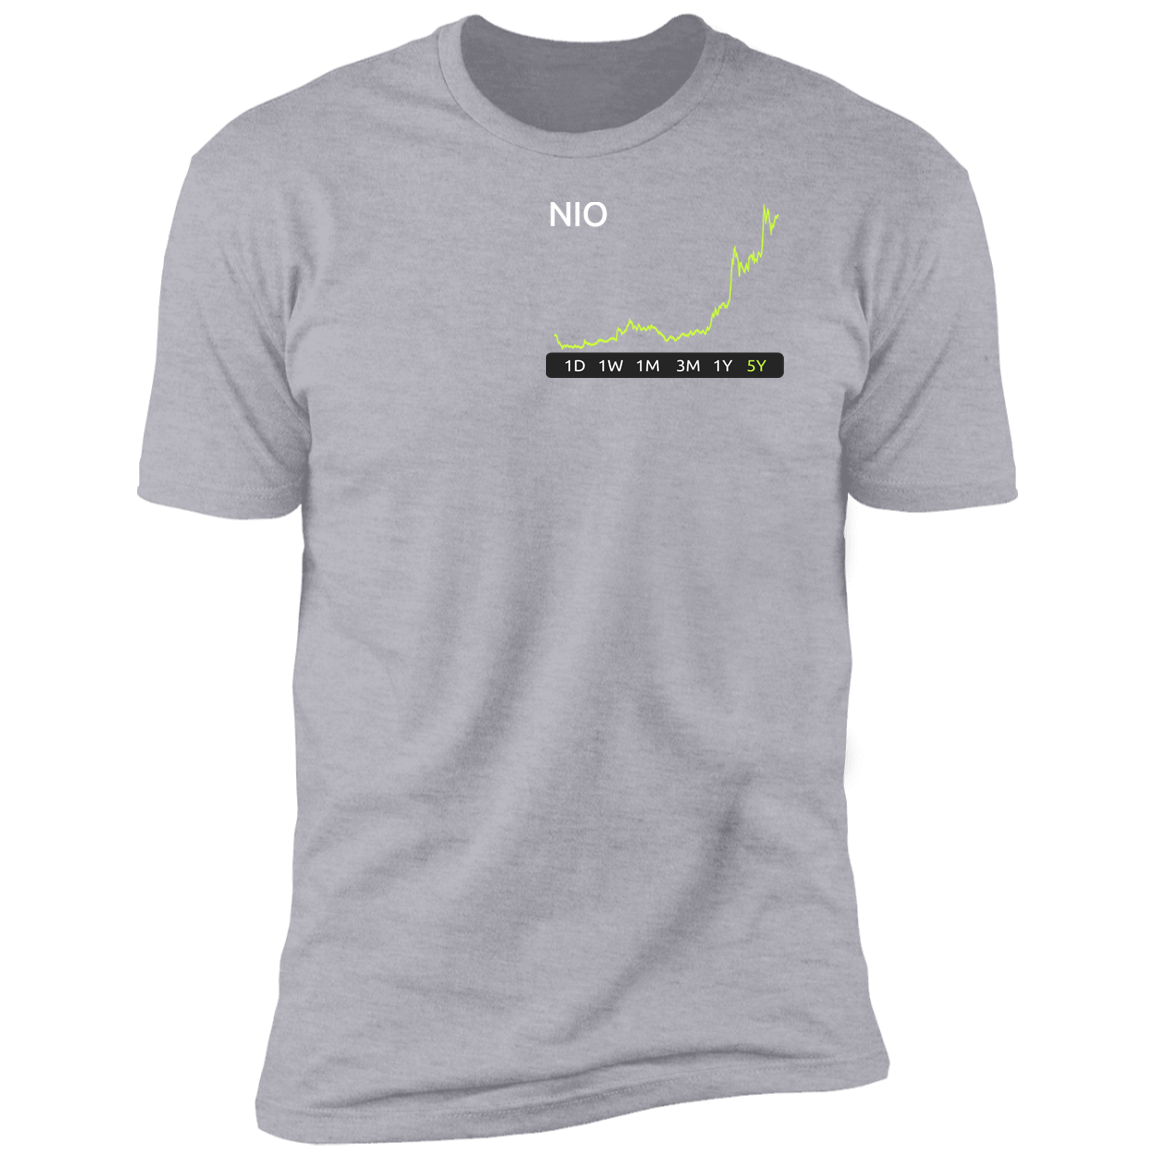 NIO Stock 5y Premium T-Shirt